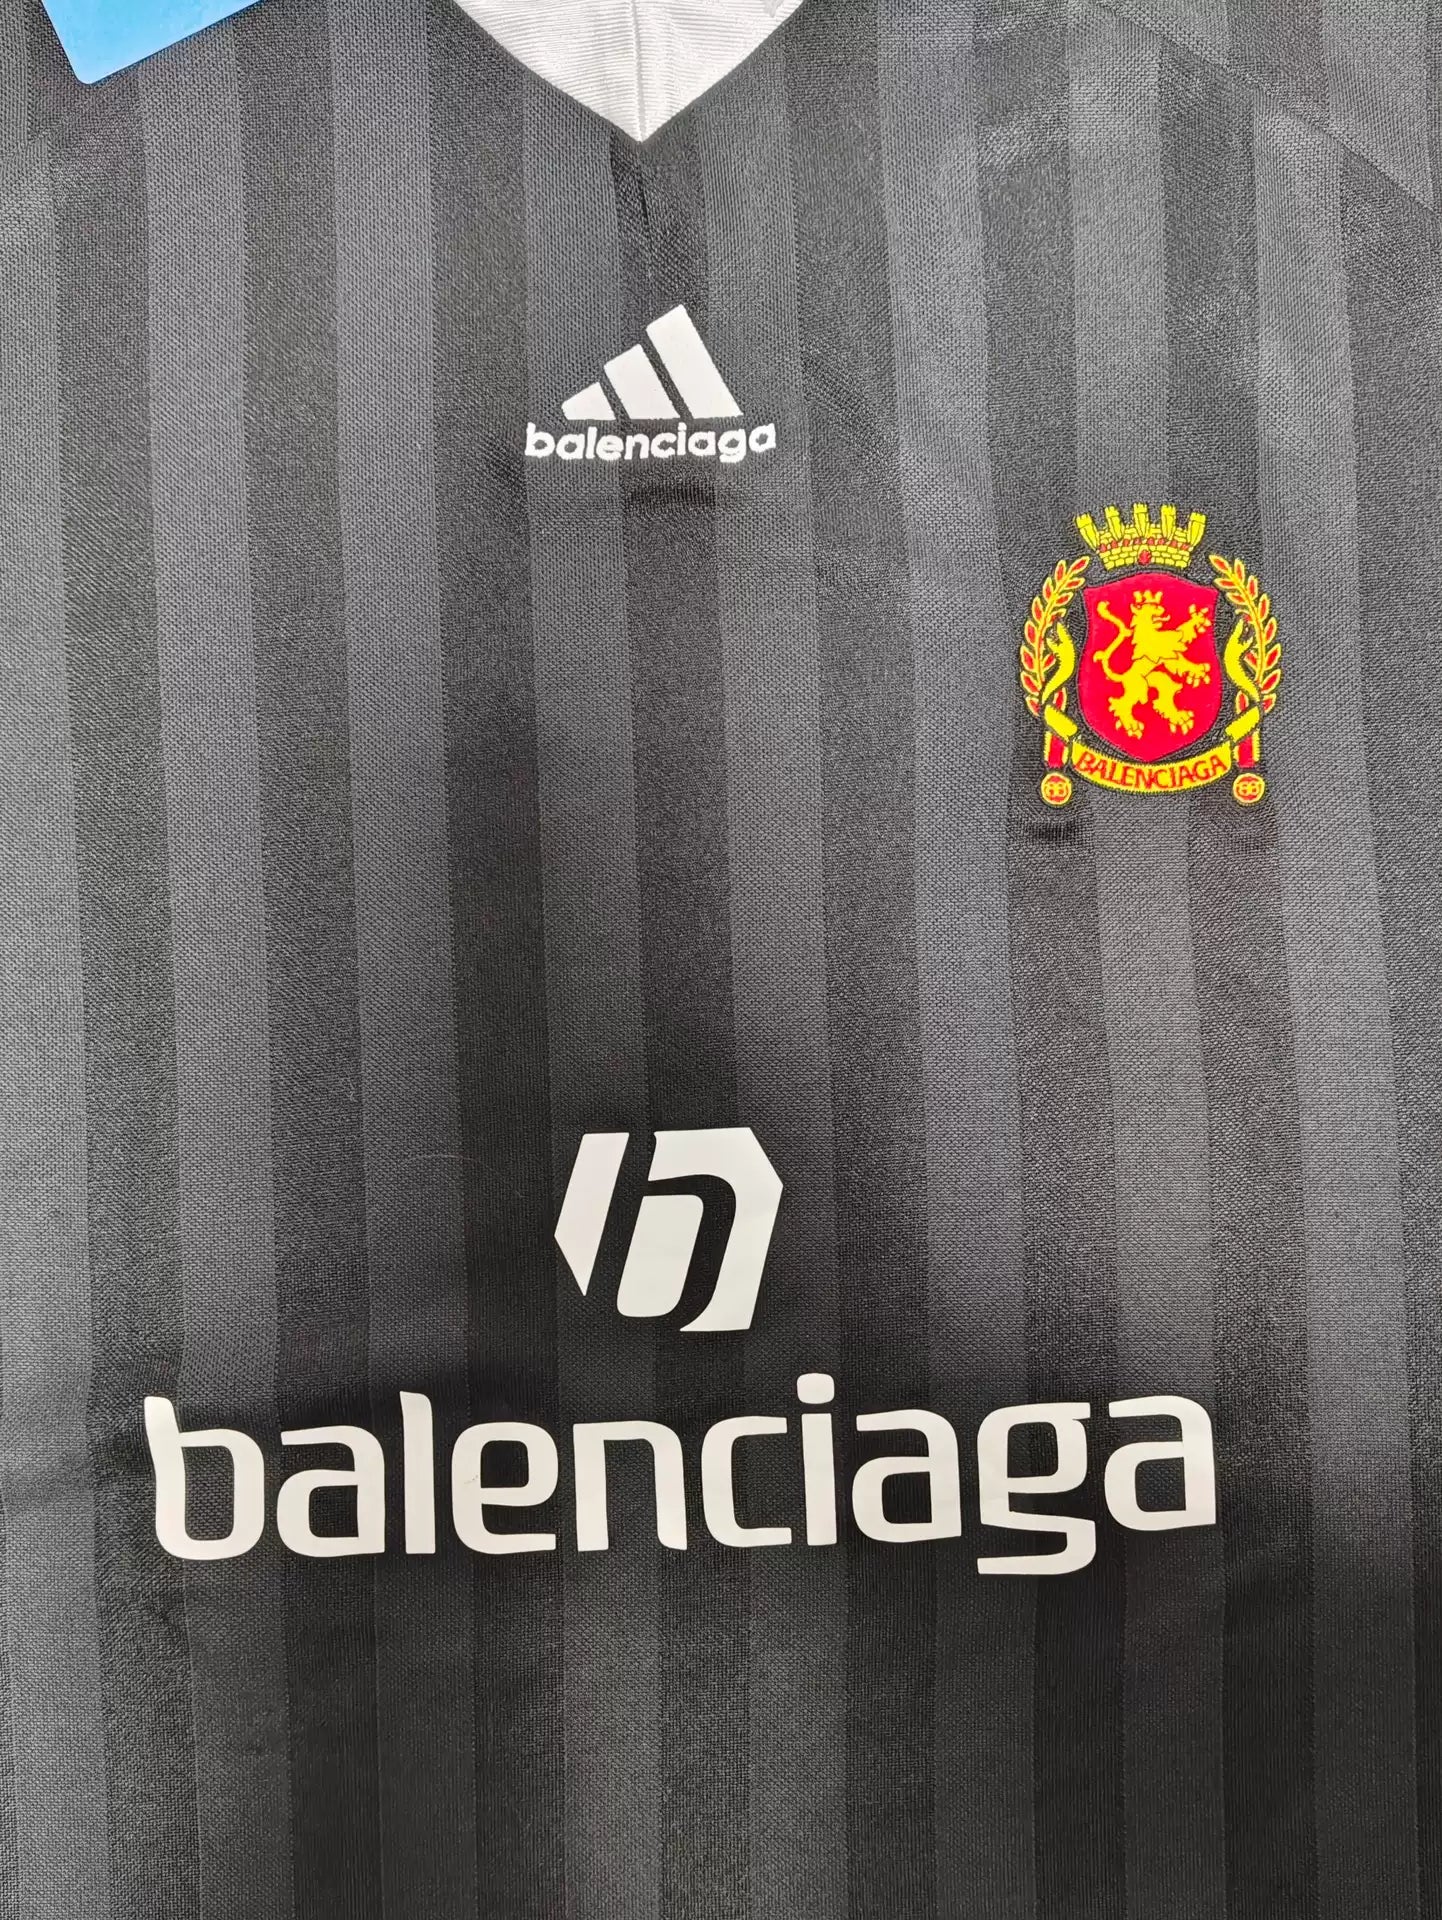 Balenciaga Adidas co branded 23ss showcasing Manchester United football short sleeves